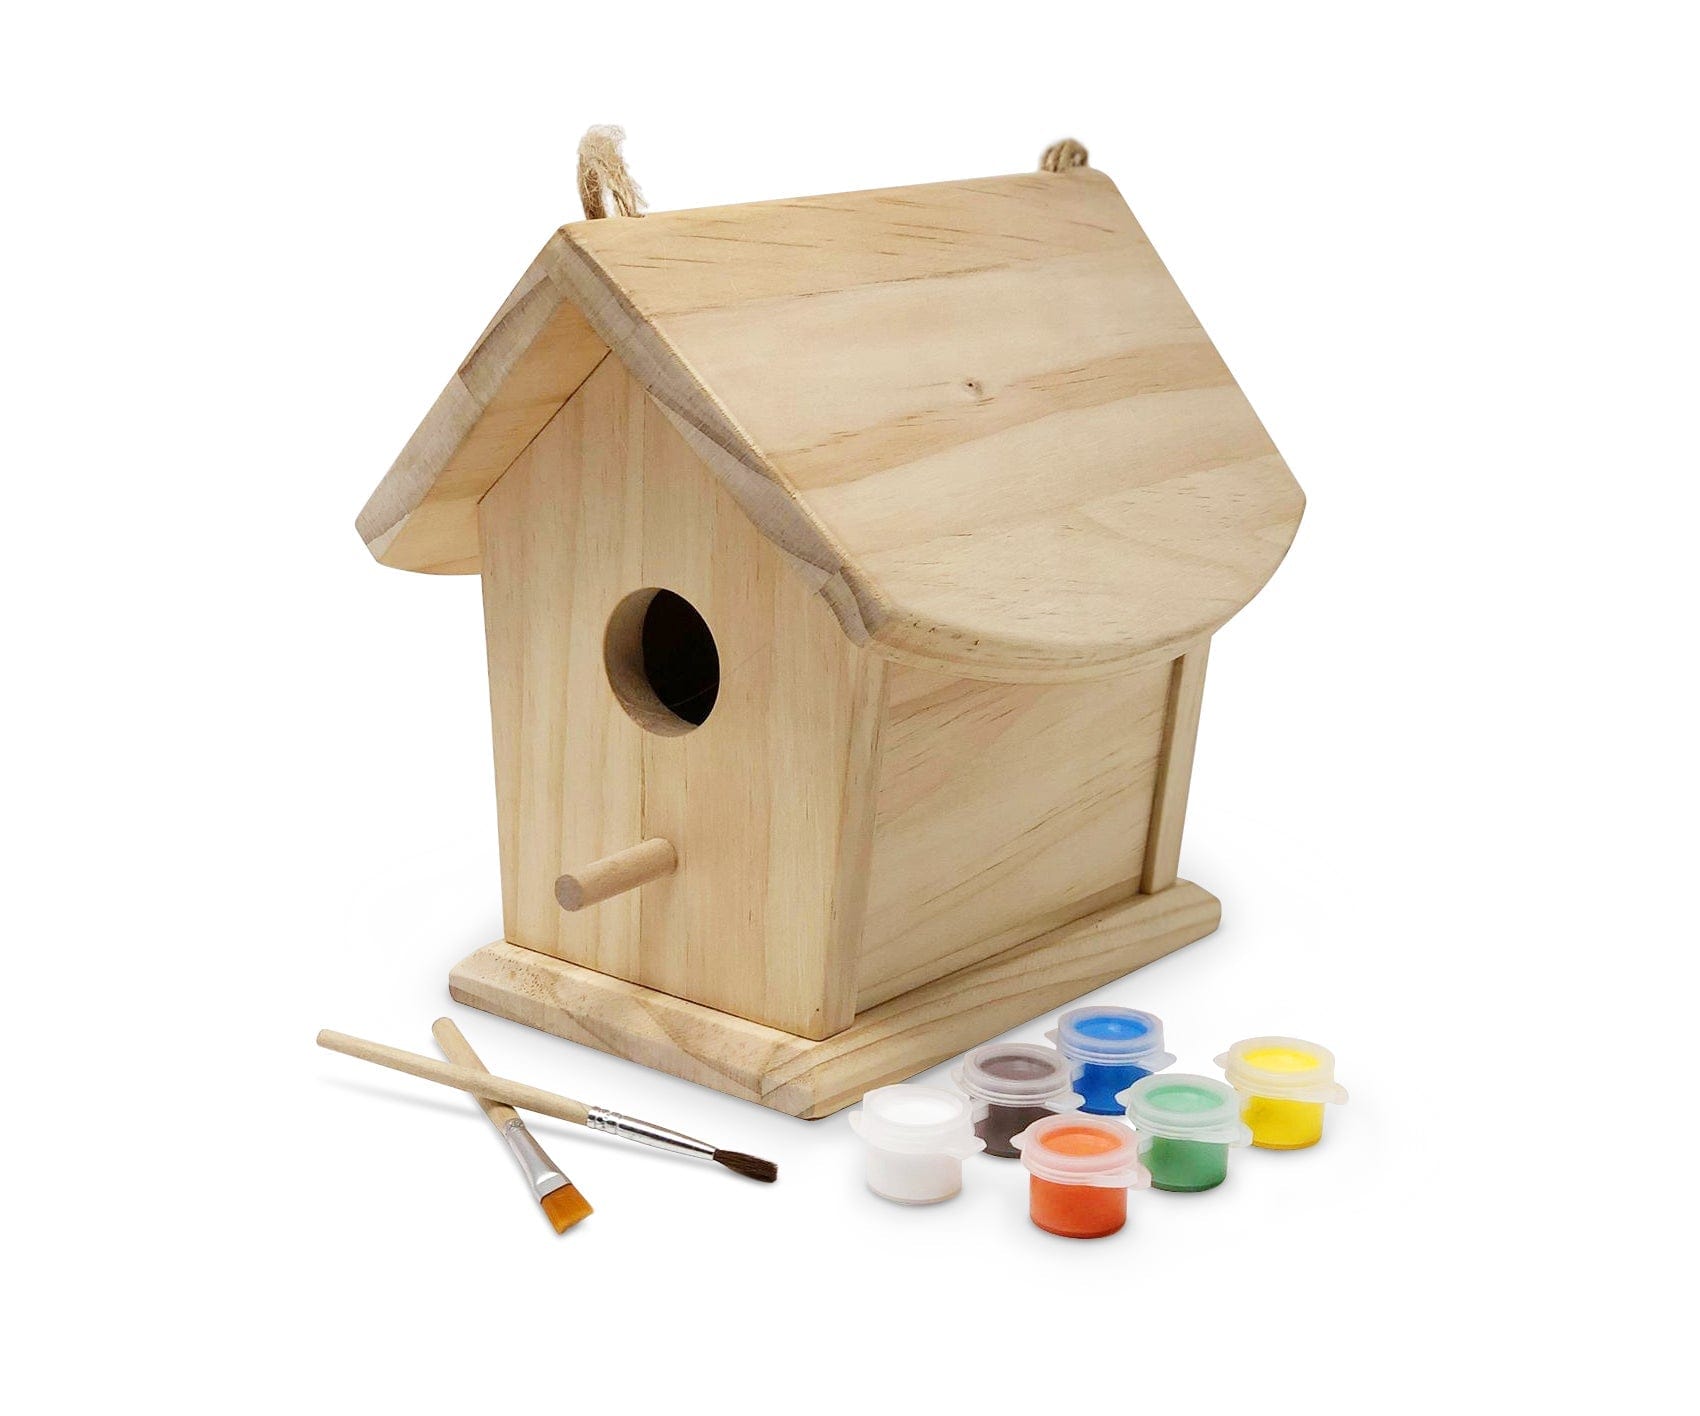 Kinderfeets birdhouse kit Kinderfeets Birdhouse Kit